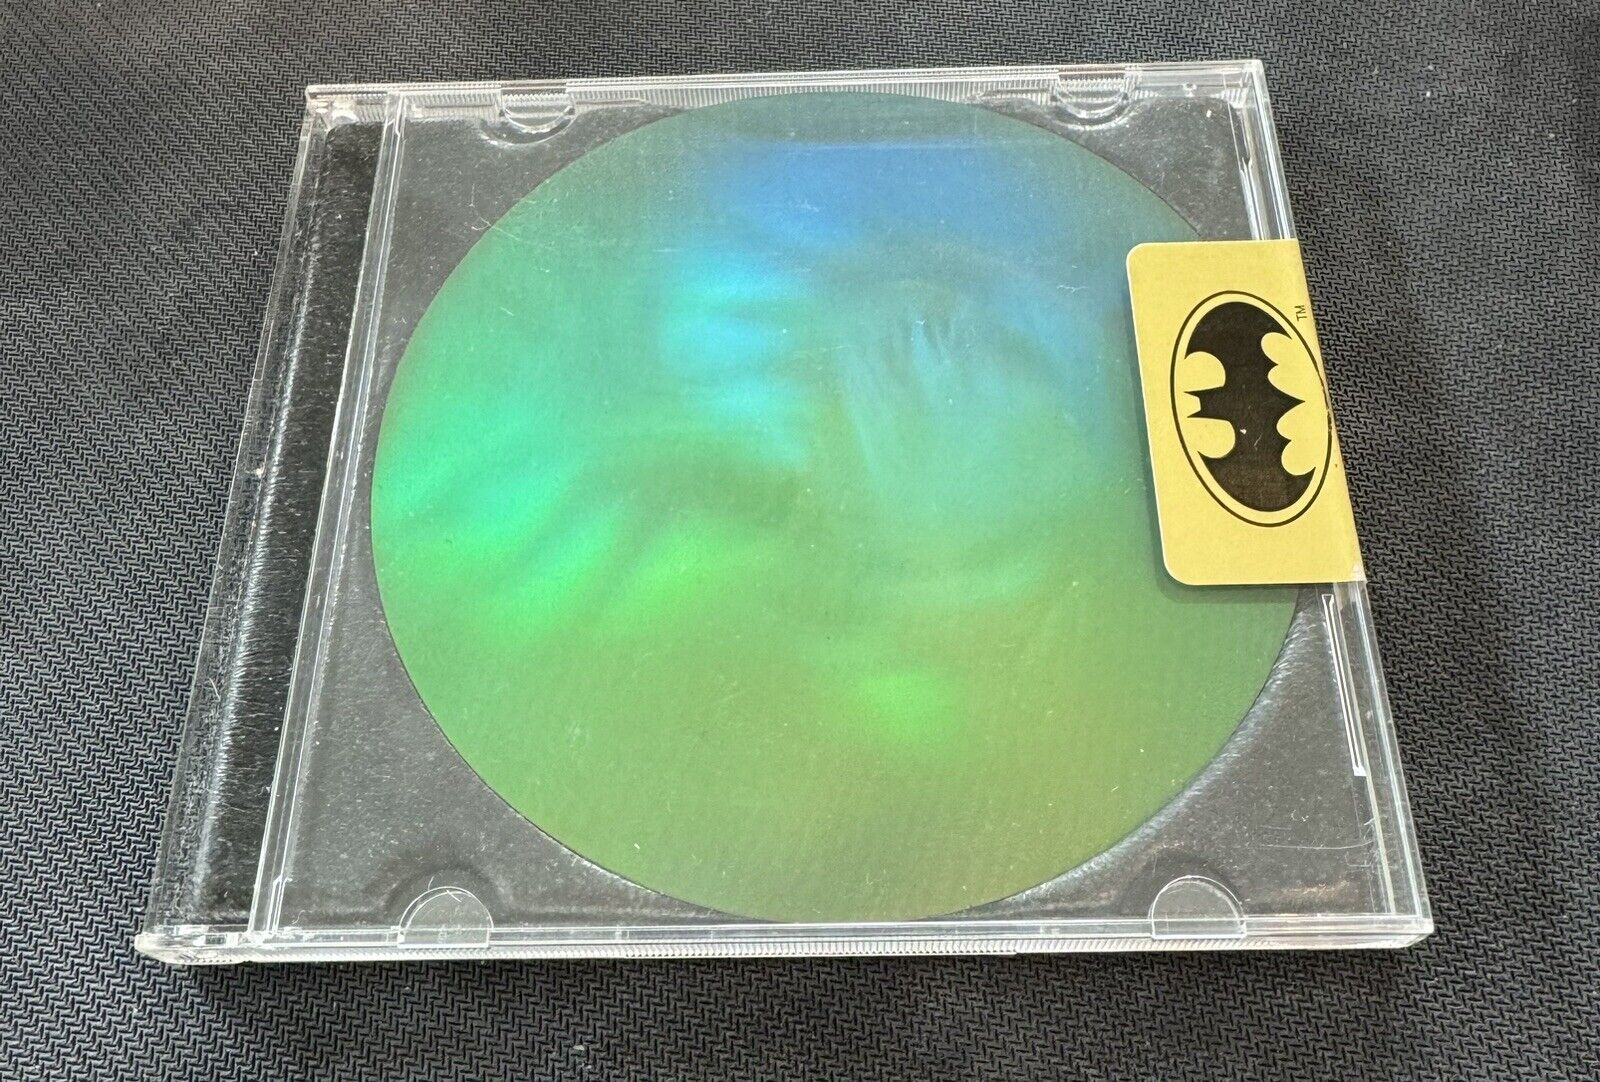 Skybox Batman Saga Of The Dark Knight Skydisc Hologram PROMO CD 001232/10,000